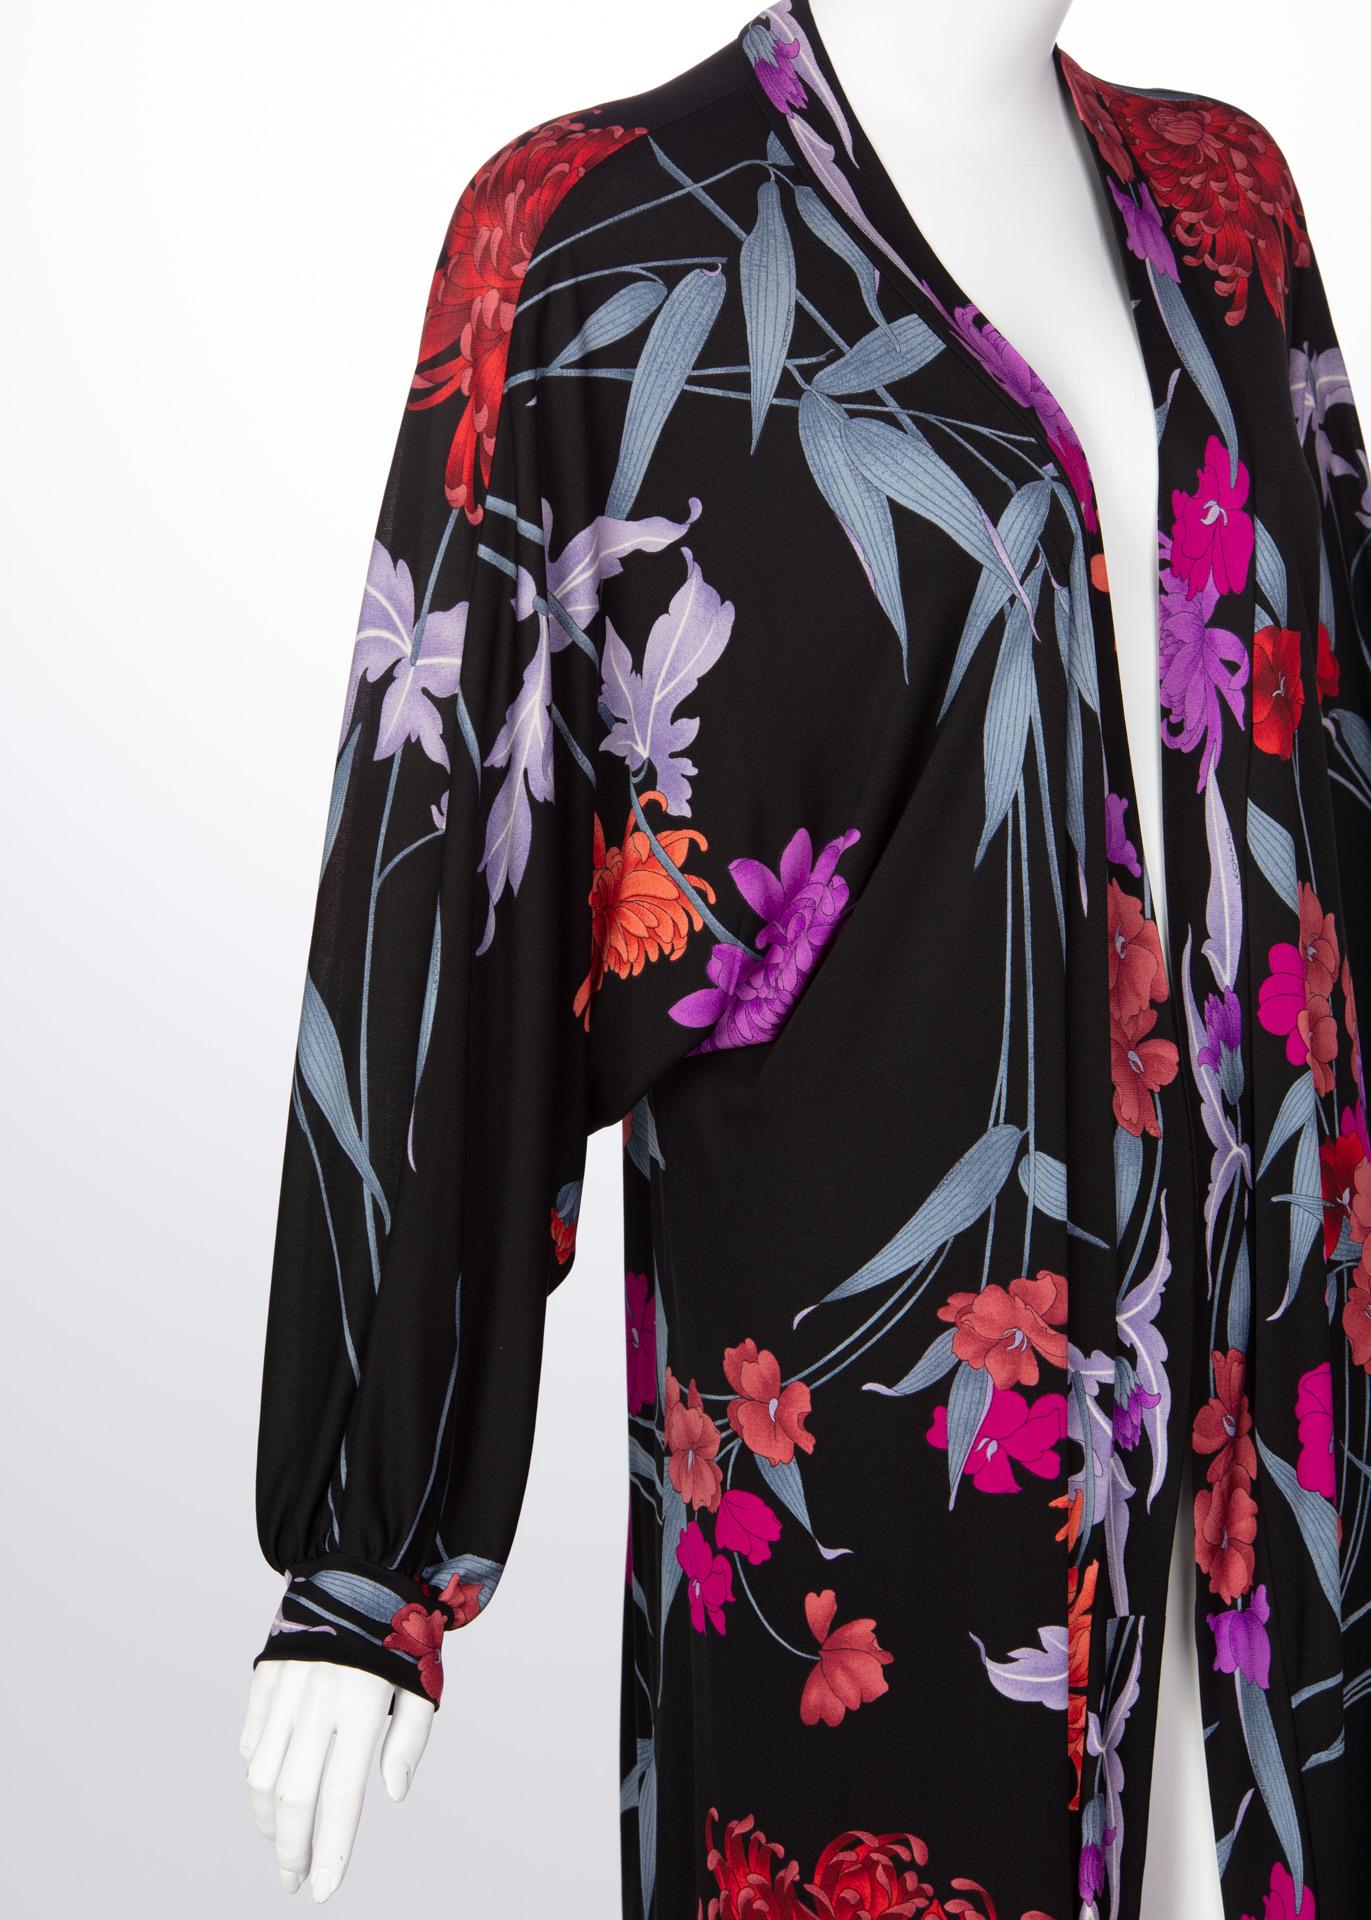 Women's 1970s Leonard Paris Floral Silk Jersey Dress Jacket For Sale